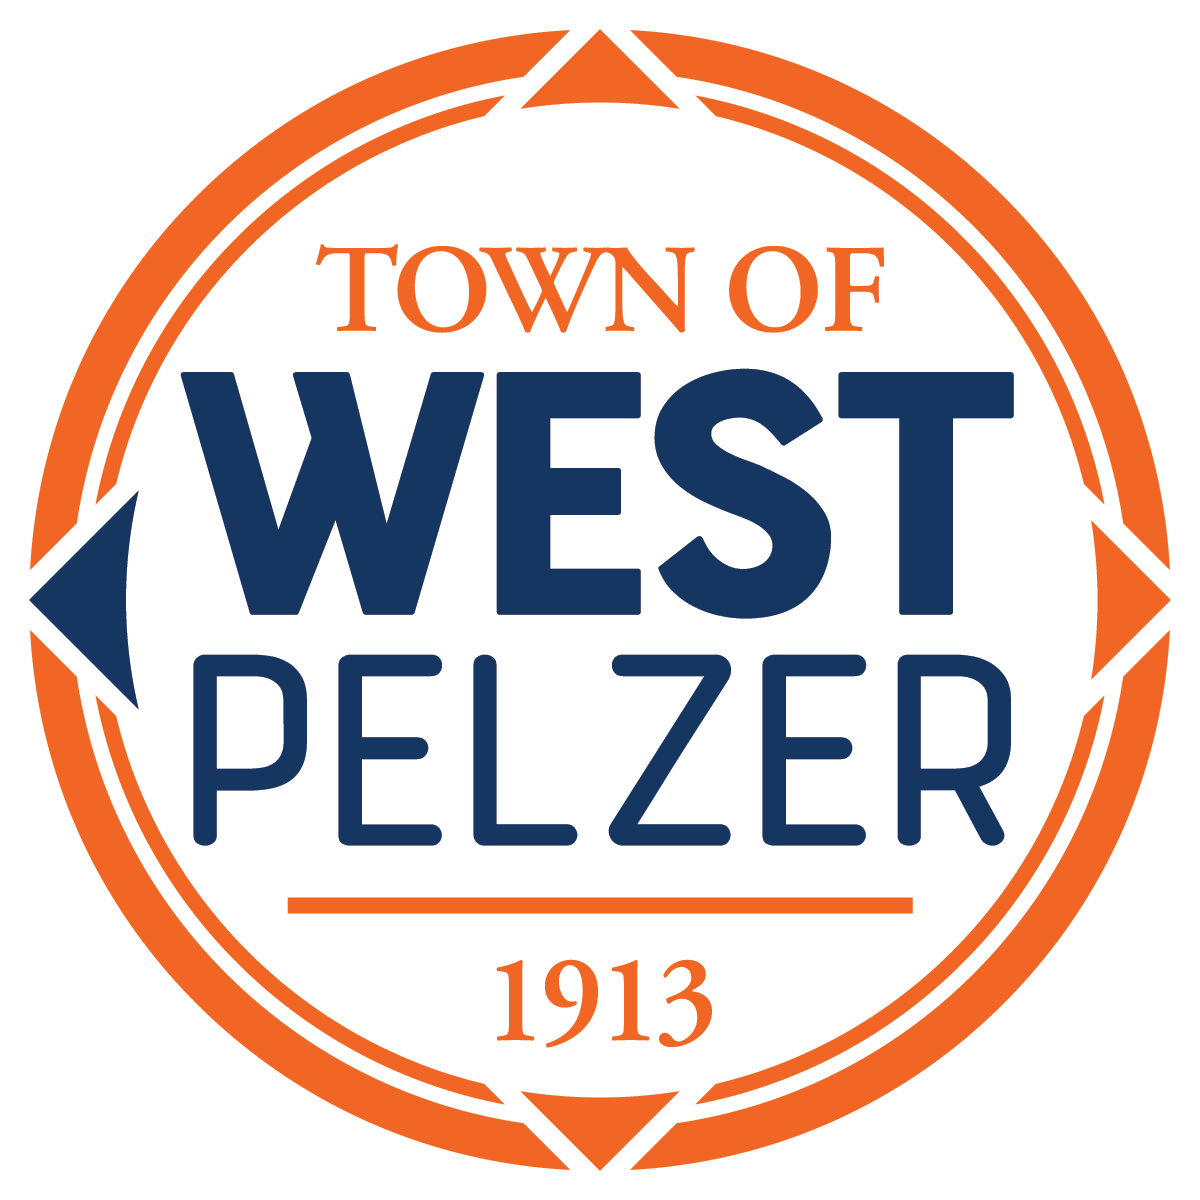 Town of West Pelzer